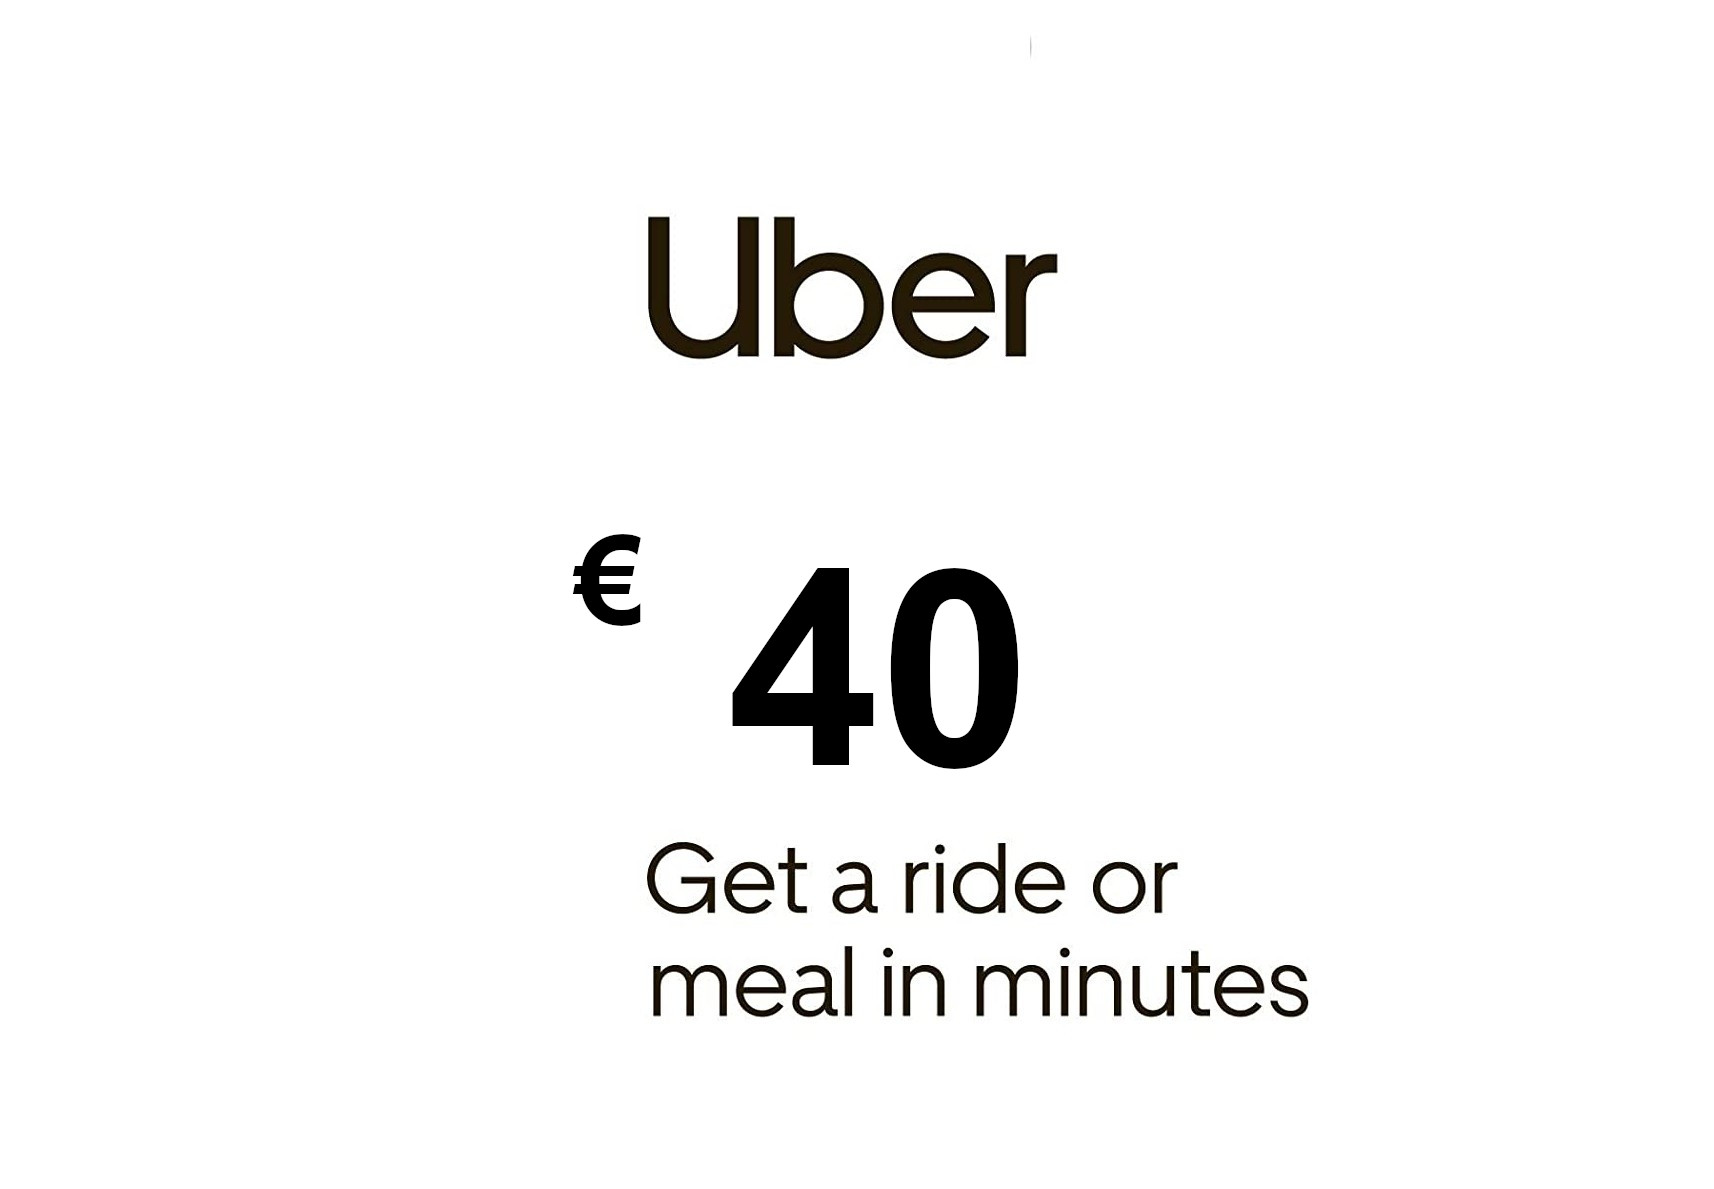 Uber €40 EU Gift Card